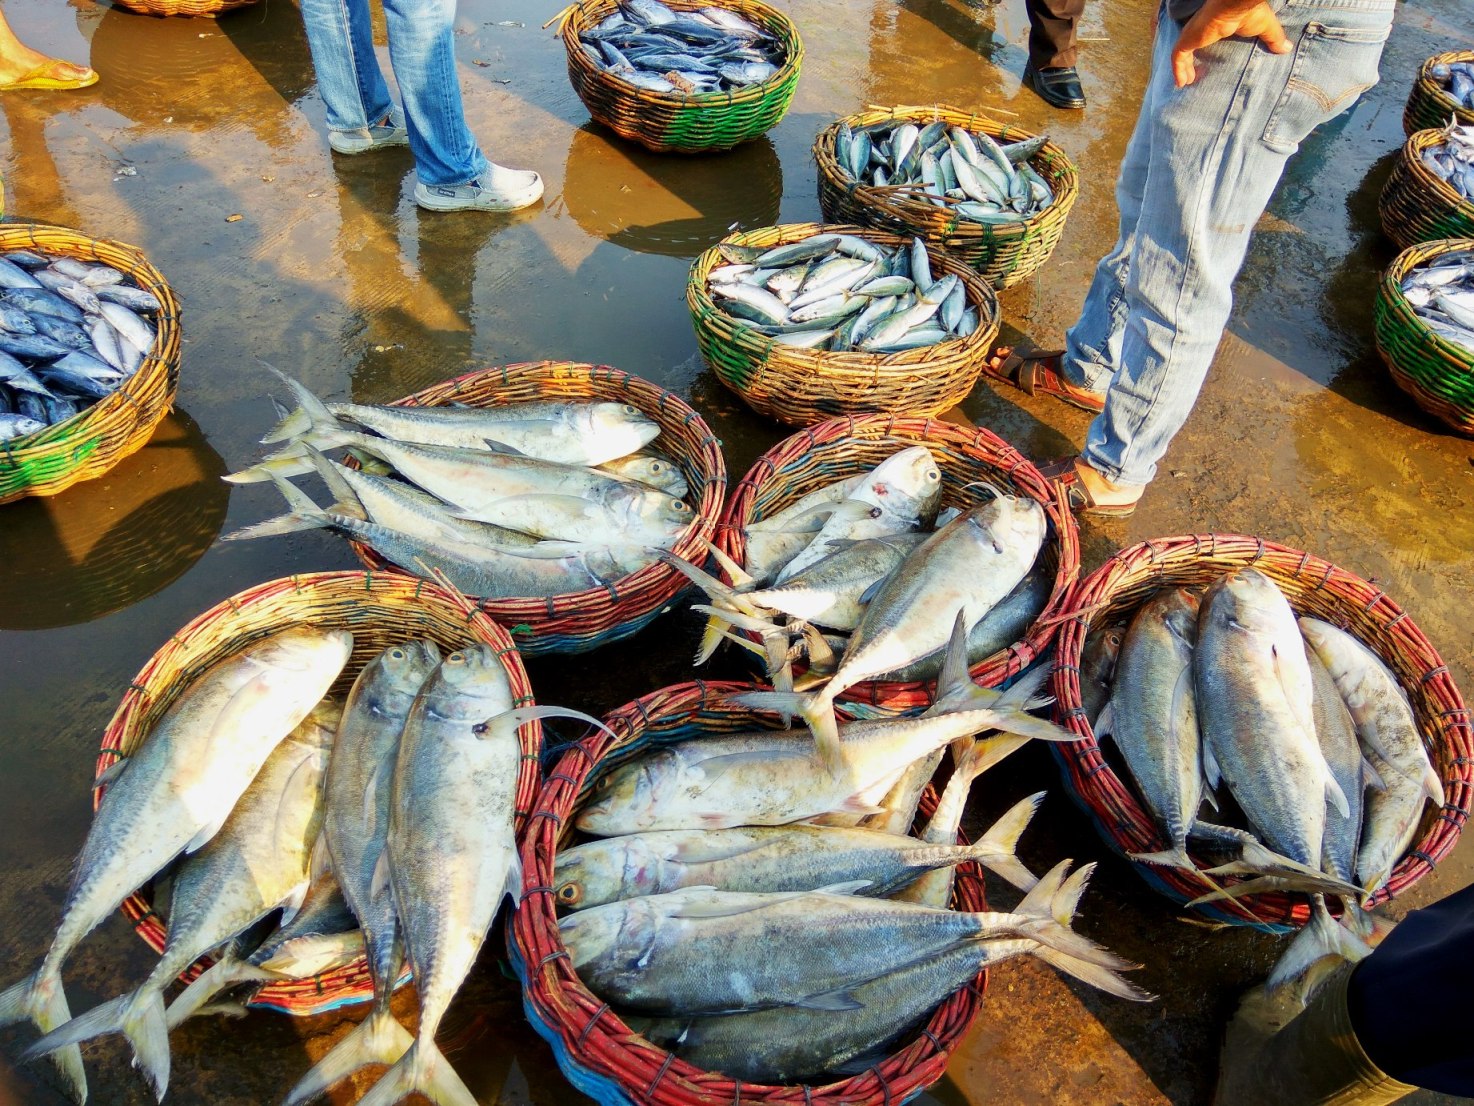 Ikan dalam keranjang hasil tangkapan nelayan siap dijual di Pangkalan Pendaratan Ikan (PPI) Pasiran, Pulau Sabang, Aceh pada Minggu (01/05/2016). Foto : M Ambari 